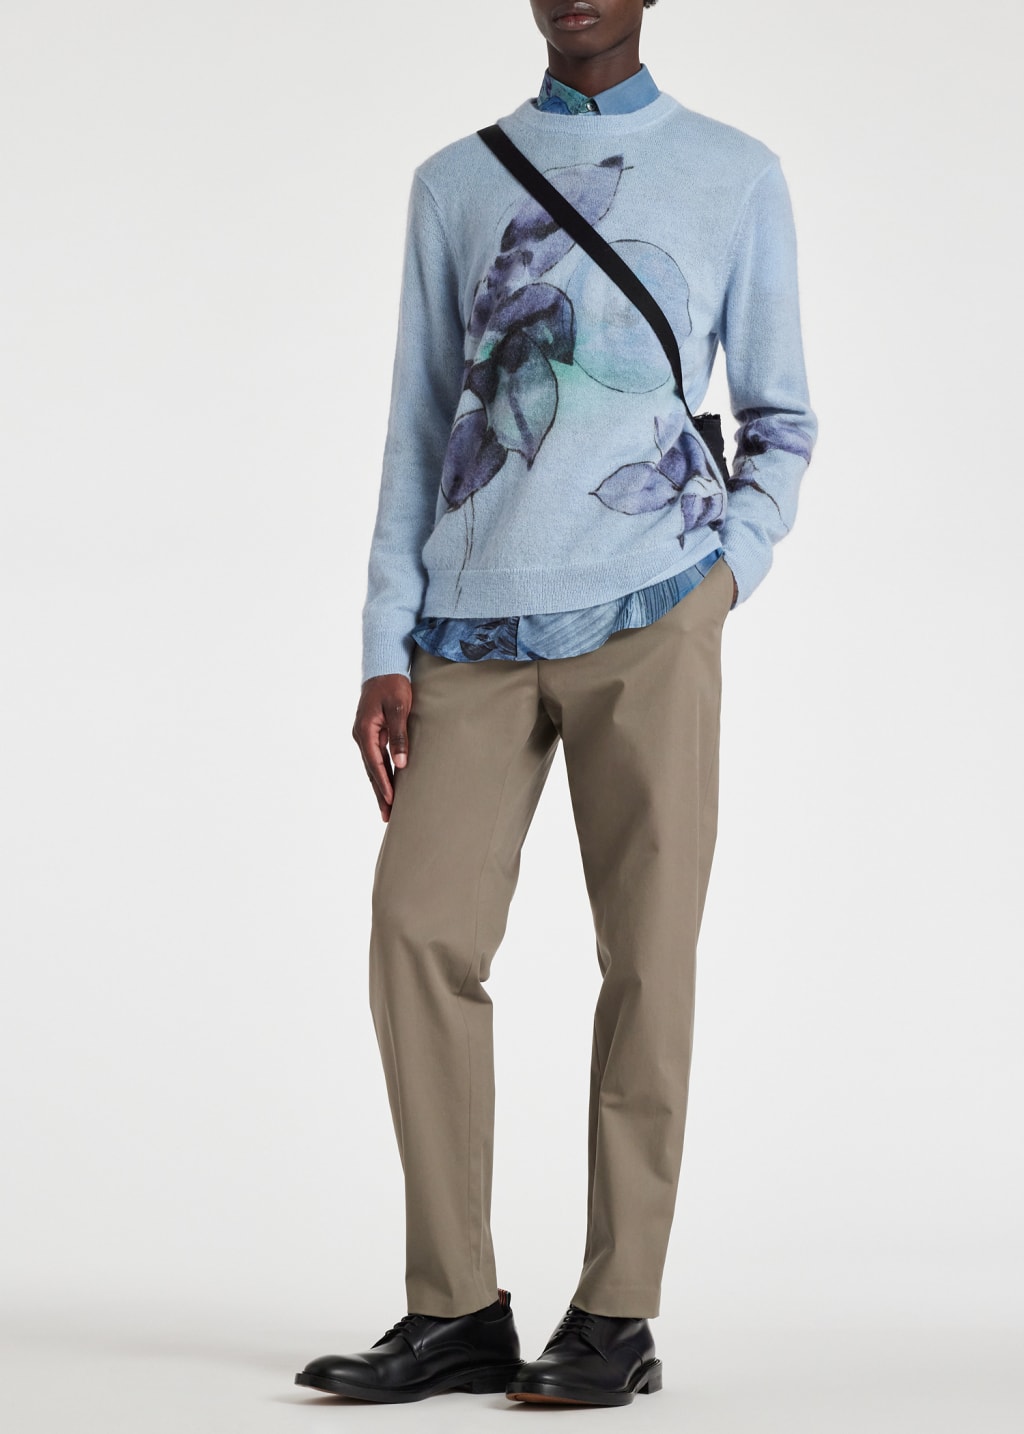 Model View - Blue 'Narcissus' Print Viscose Shirt Paul Smith